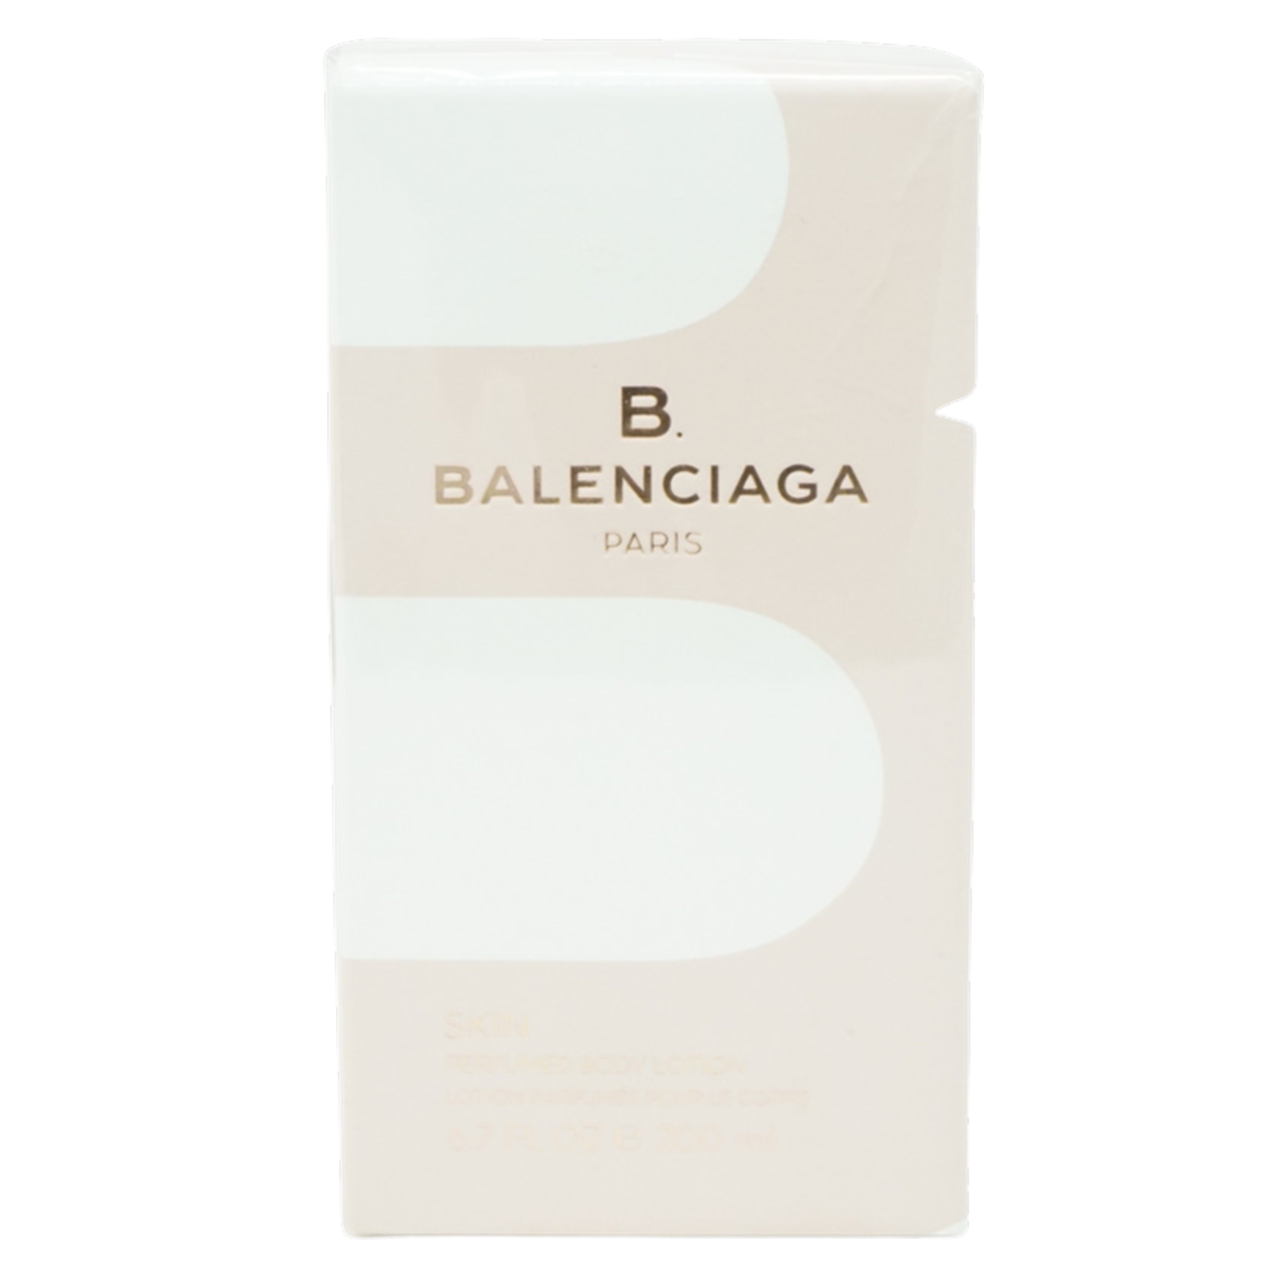 Balenciaga B. Skin perfumed Body Lotion 200ml